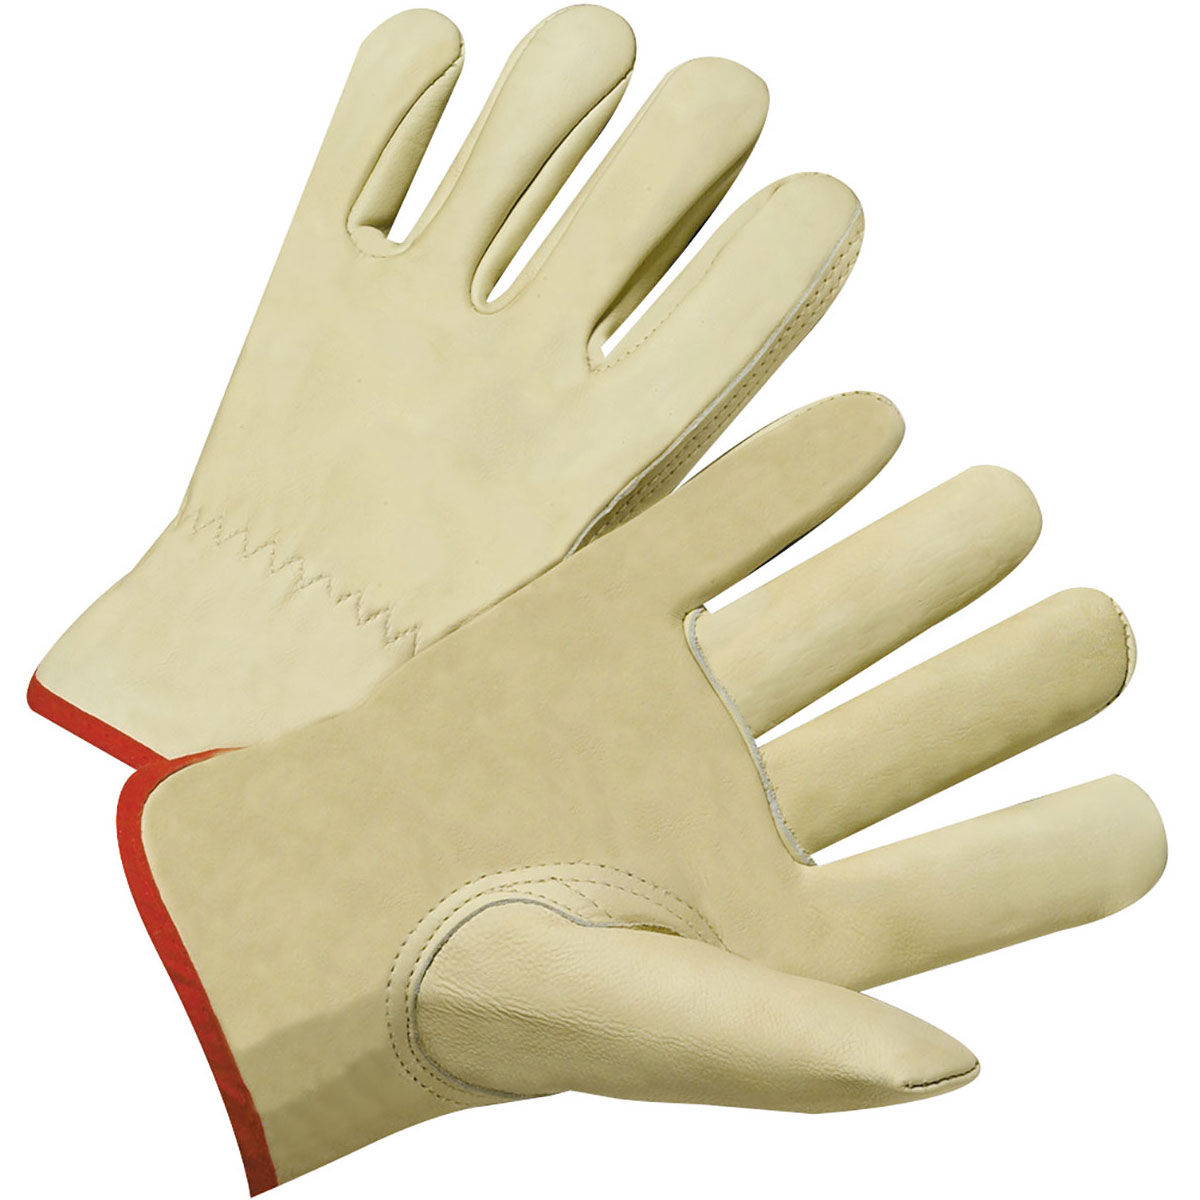 PIP Top Grain Cowhide Leather Drivers Glove